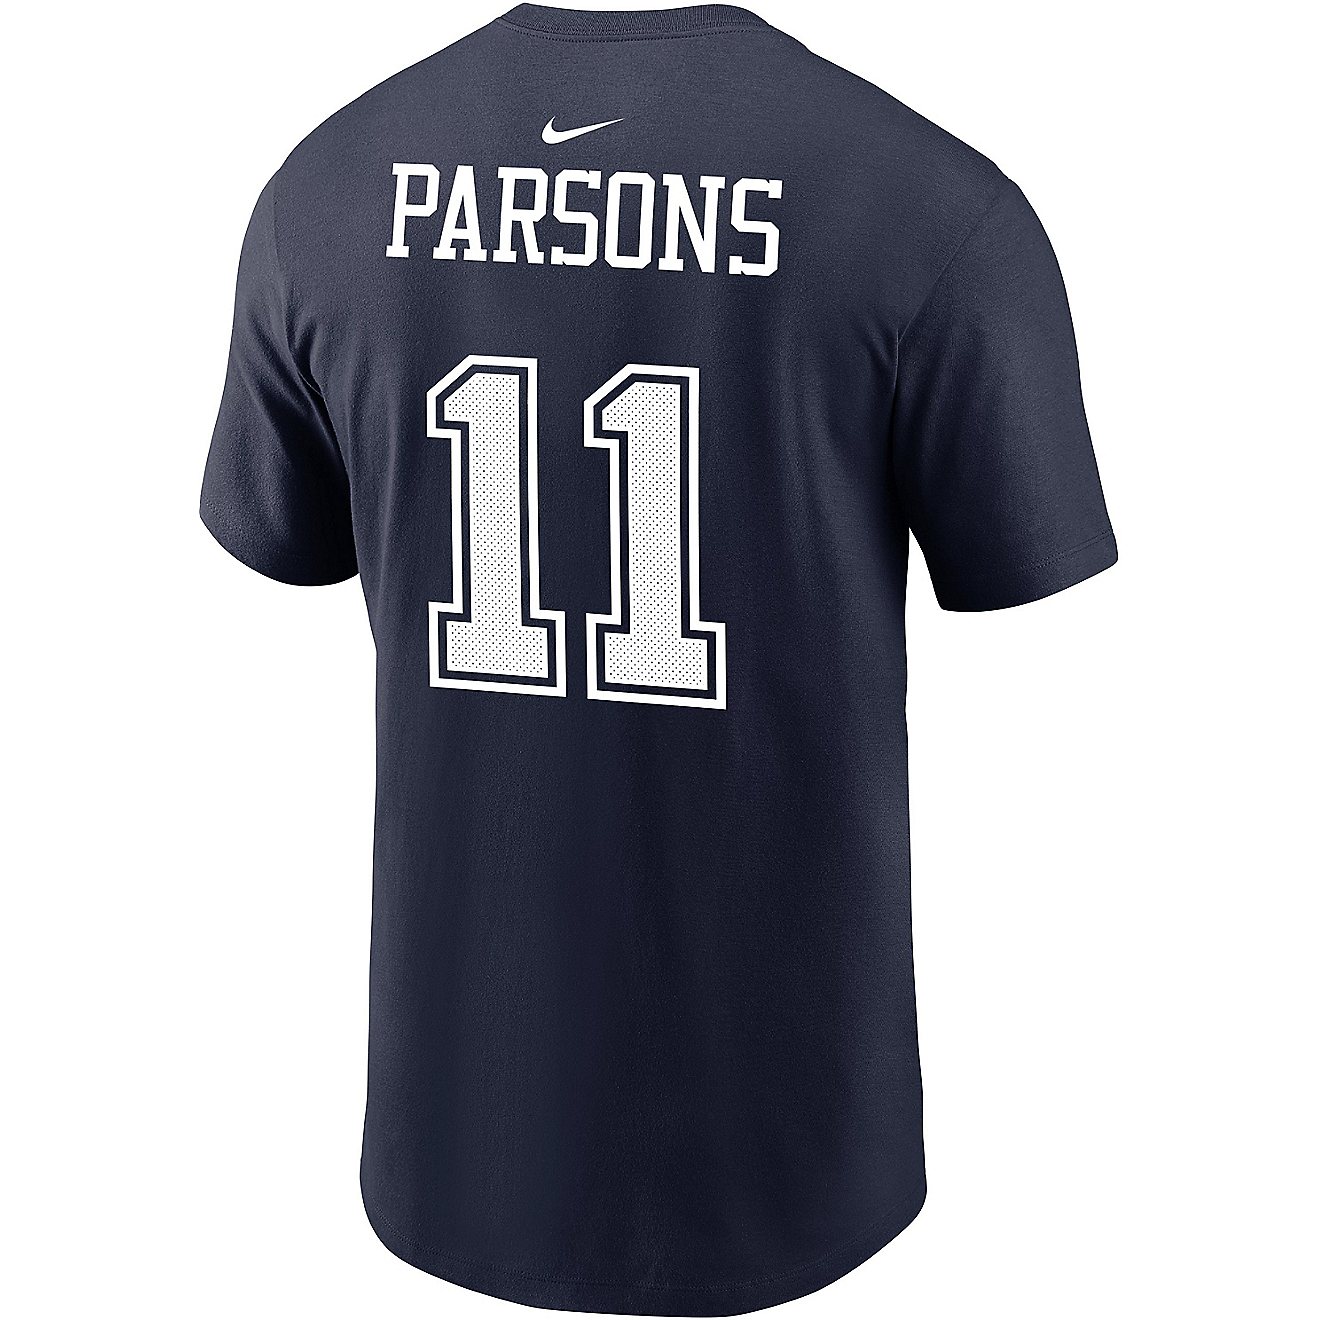 Nike Men's Dallas Cowboys Micah Parsons '21 Draft Graphic T-shirt